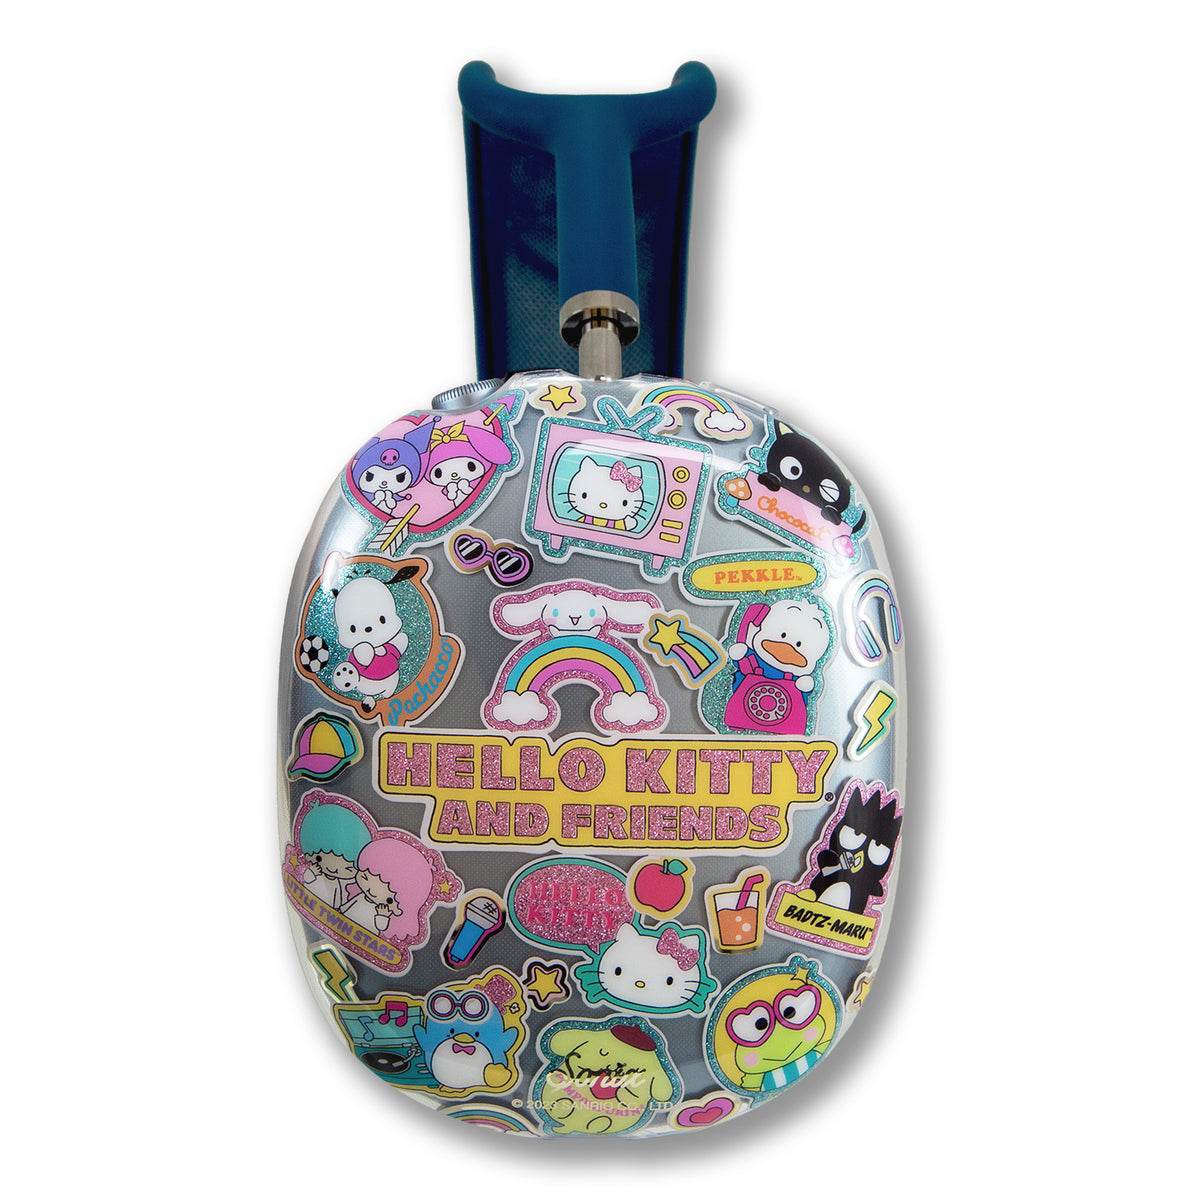 Hello Kitty and Friends x Sonix Supercute Stickers Airpods Max Cover Accessory BySonix Inc.   